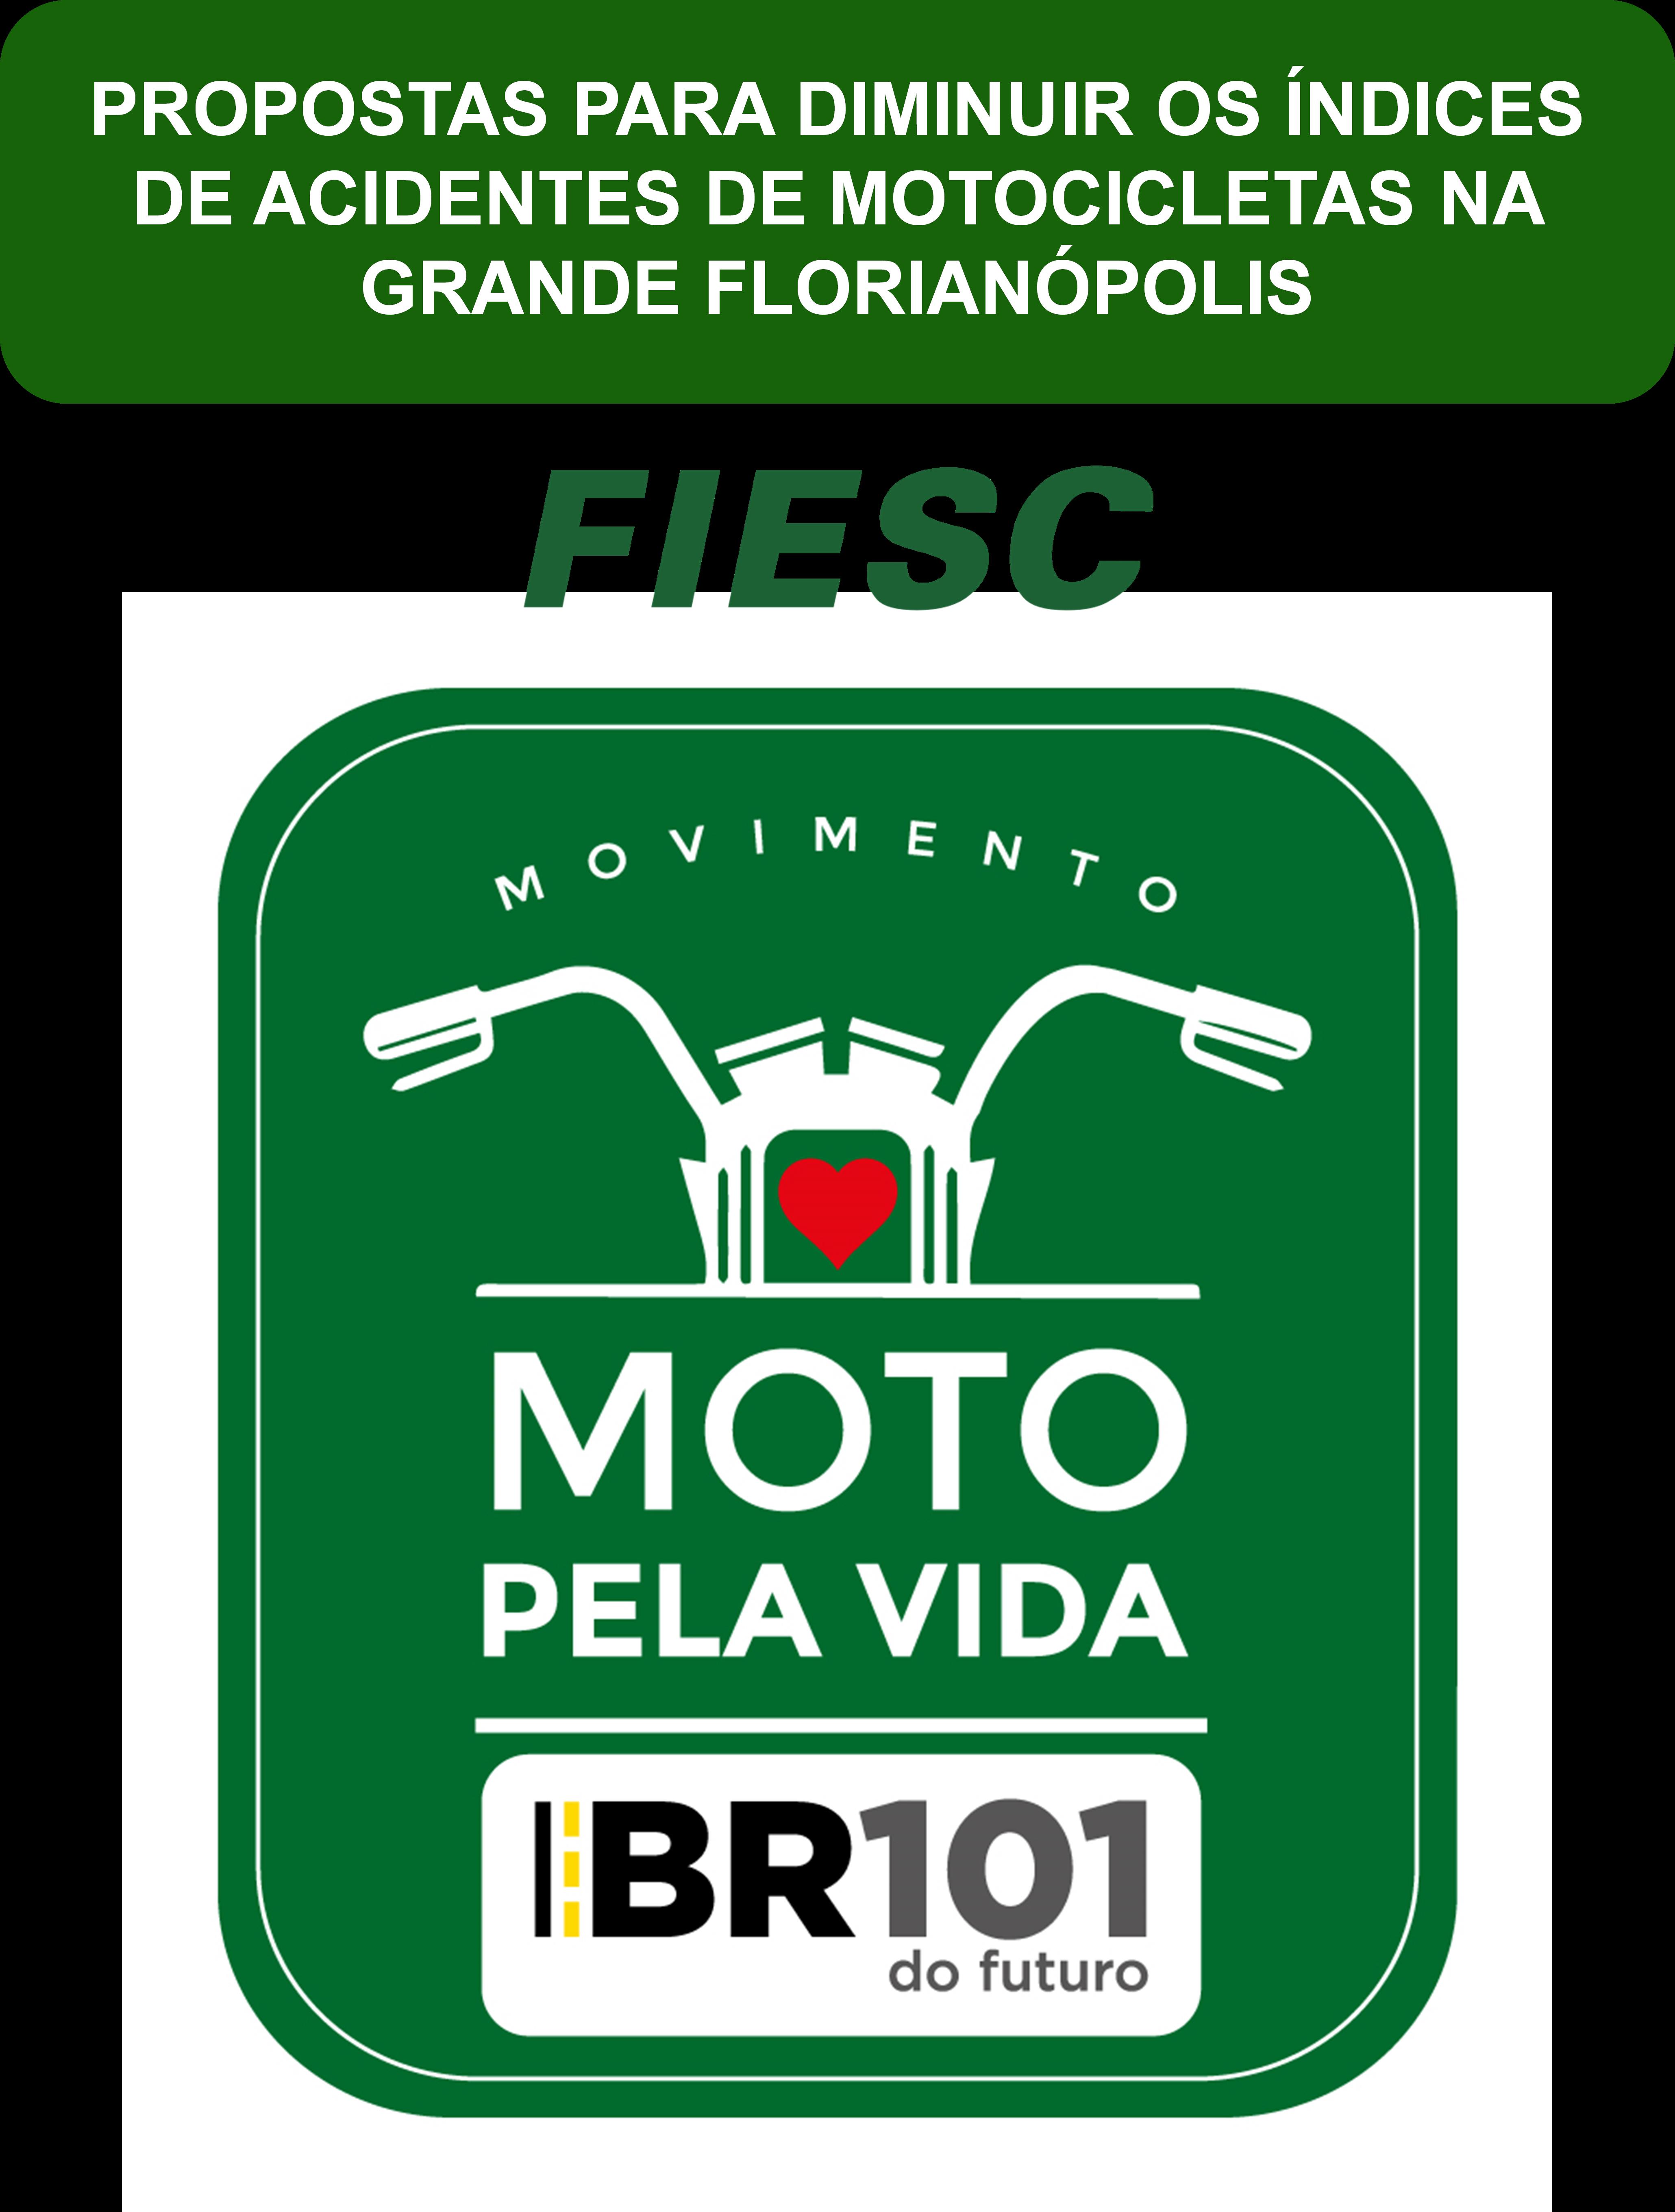 Proposta para diminuir os índices de acidentes de motocicletas na grande Florianópolis